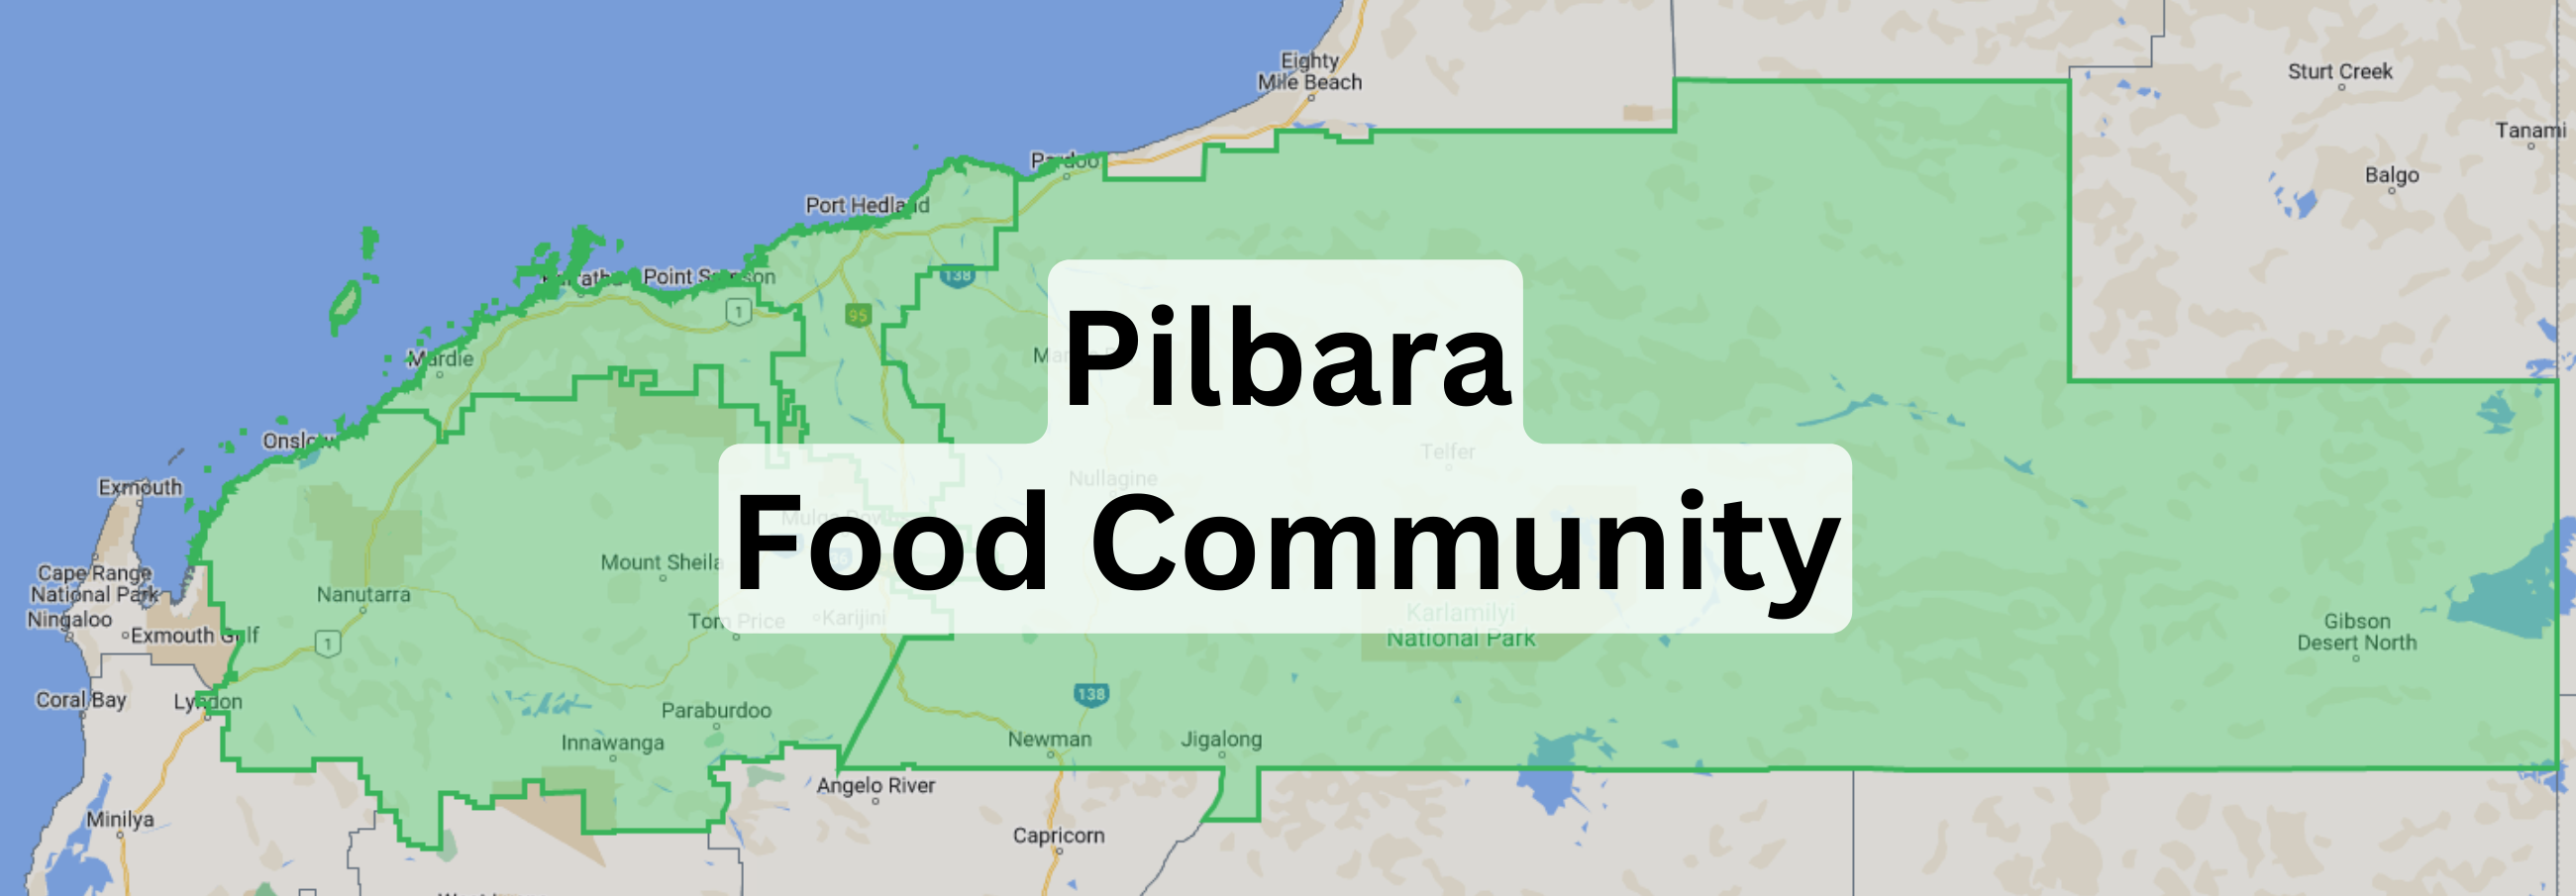 Pilbara Food Community